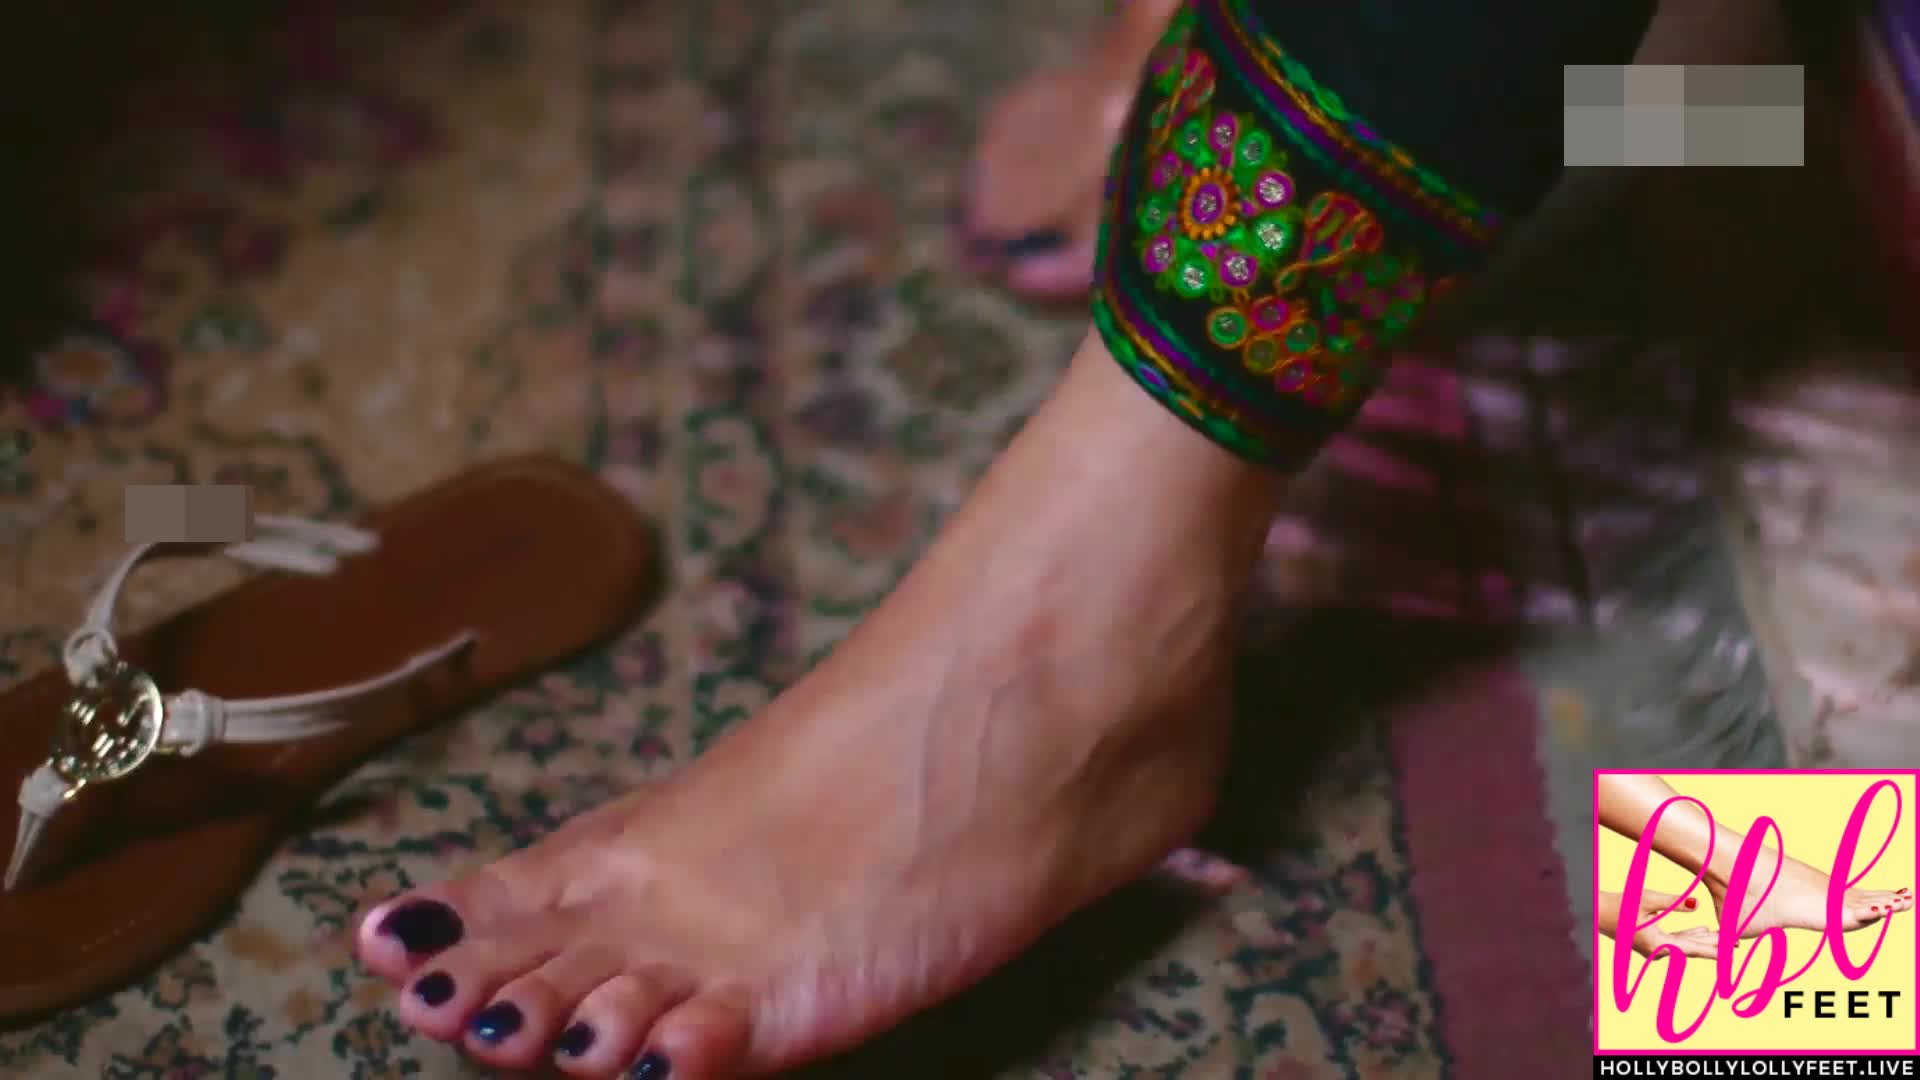 maria-wasti-feet-close-up-urdu1-dukh-sukh-ep-12-05